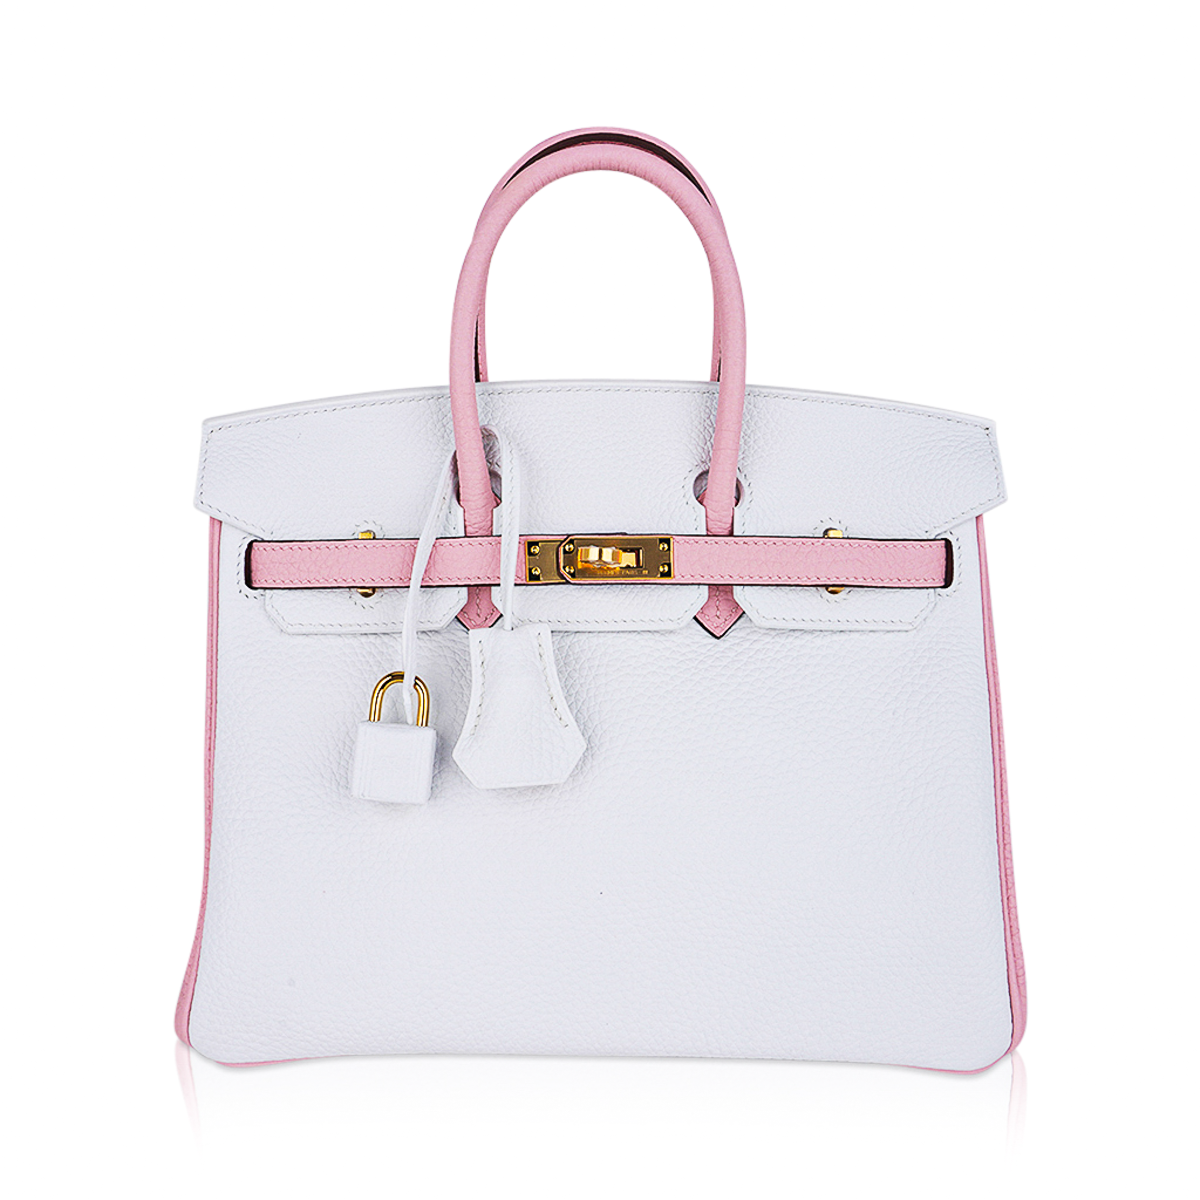 Hermes Special Order HSS Birkin 25 Bag in Rose Sakura & White Clemence Leather with Gold Hardware